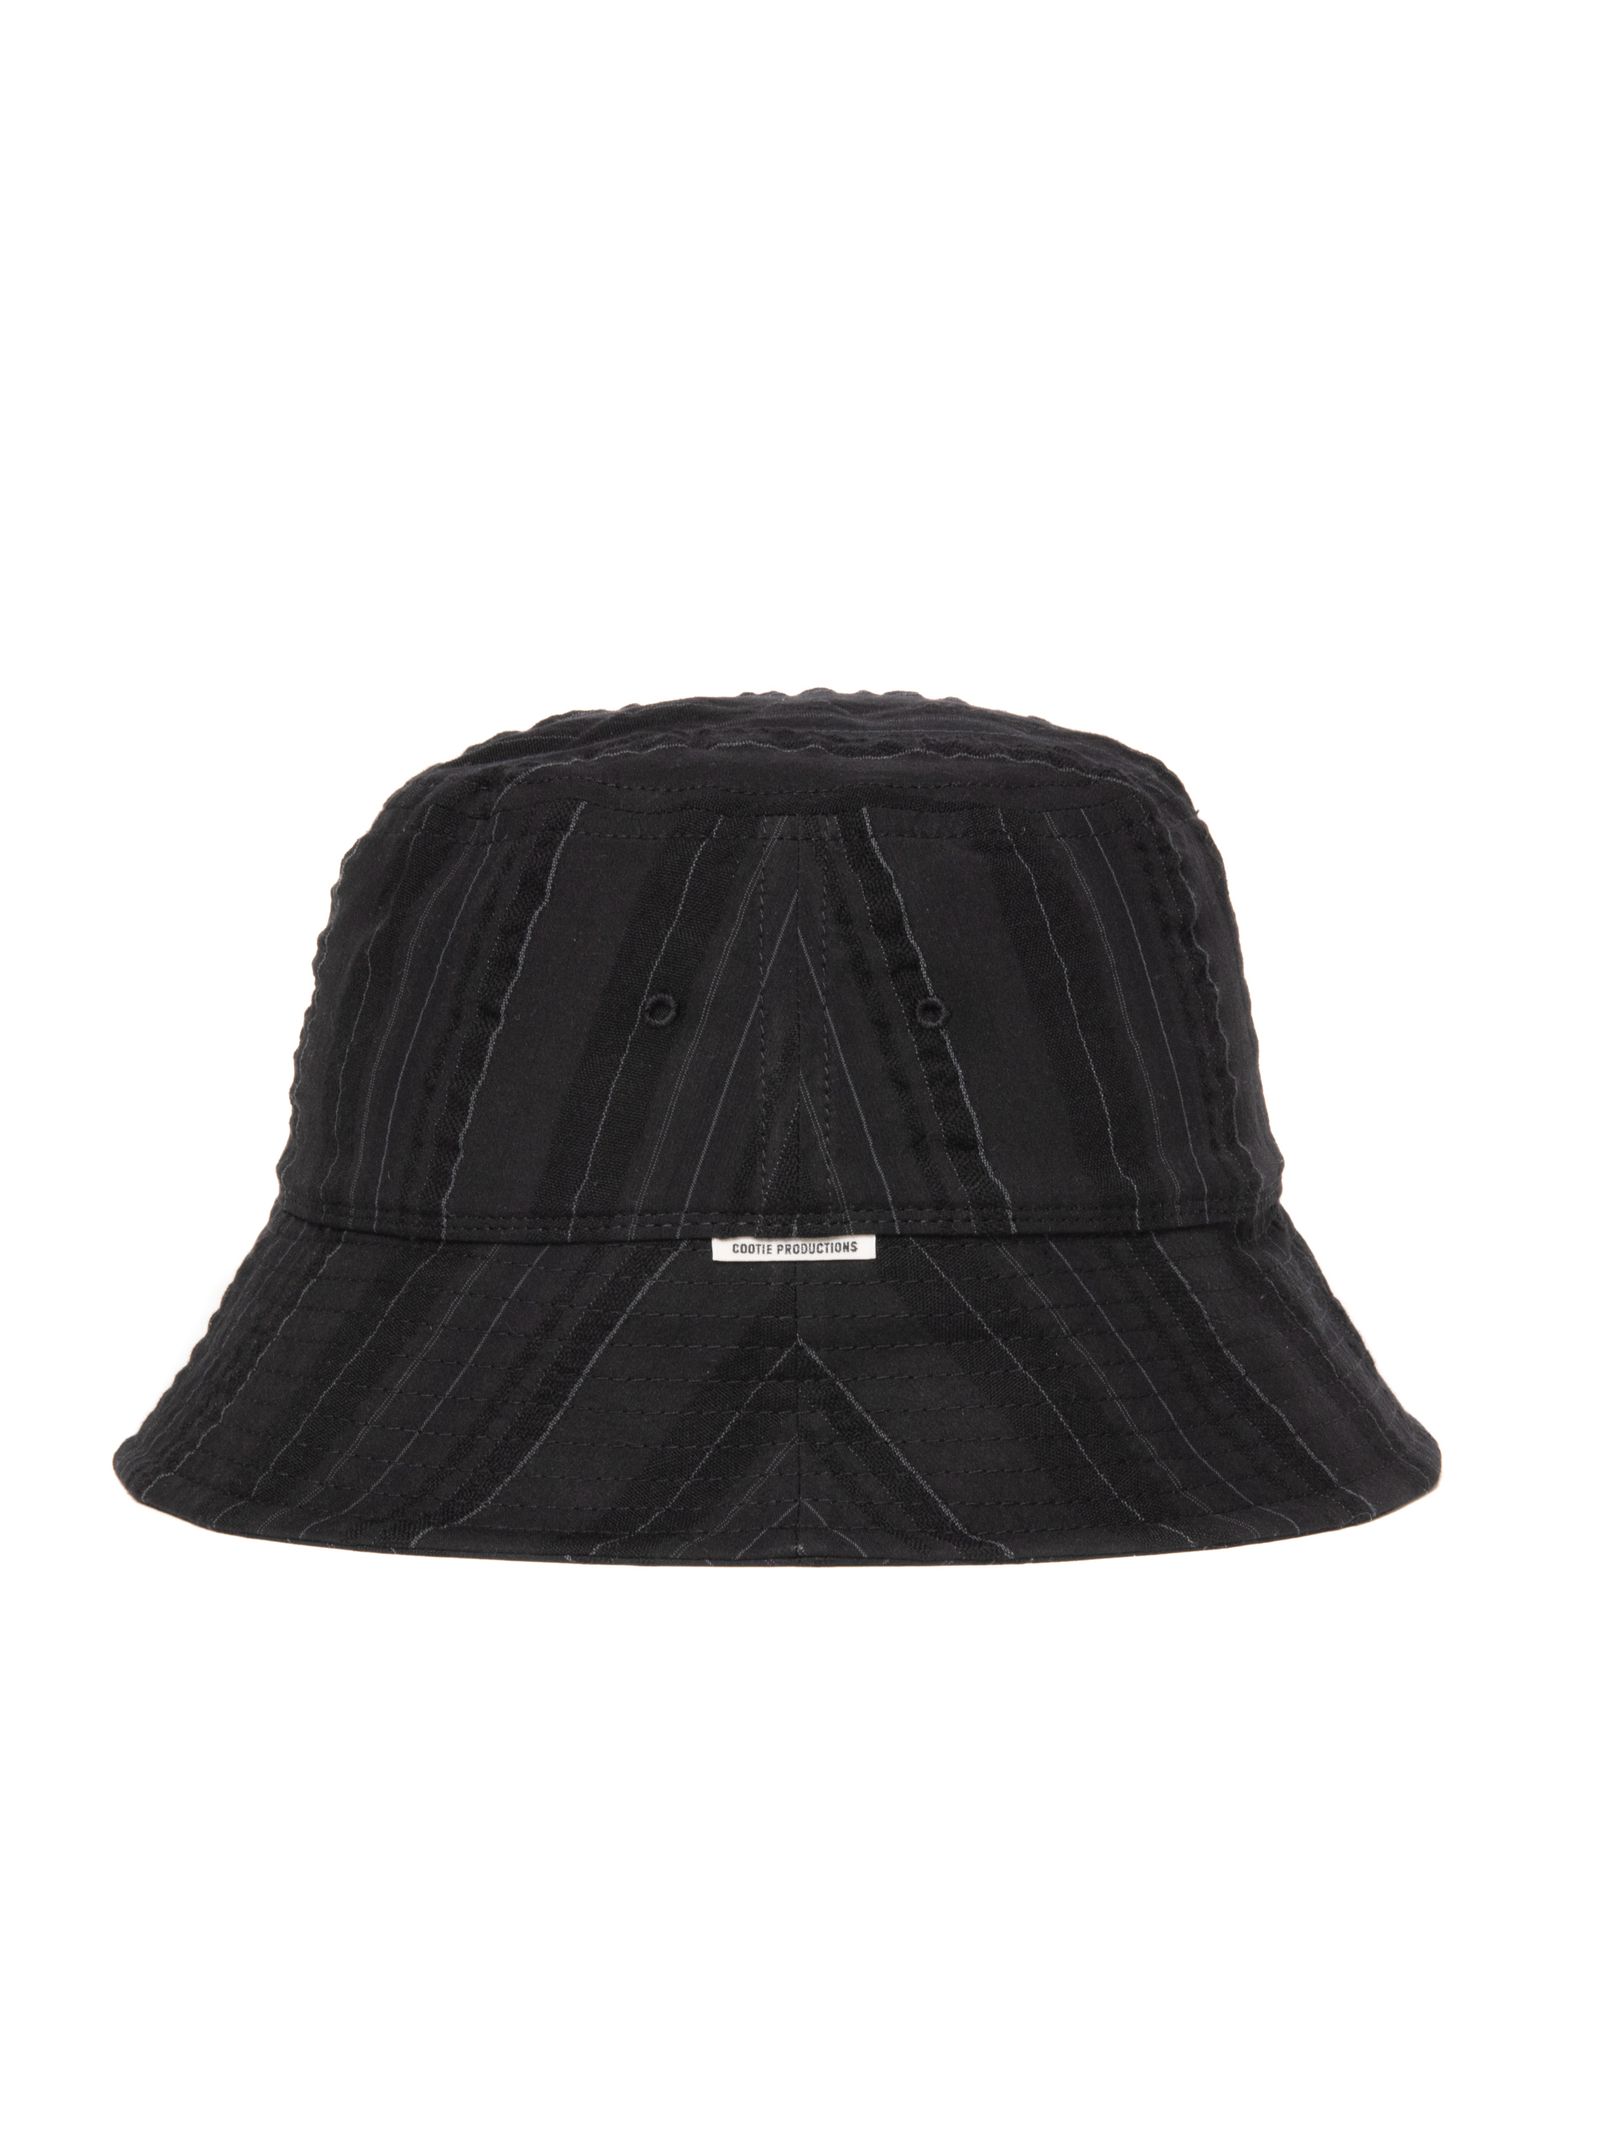 COOTIE PRODUCTIONS - 【ラスト1点】Stripe Sucker Cloth Bucket Hat 